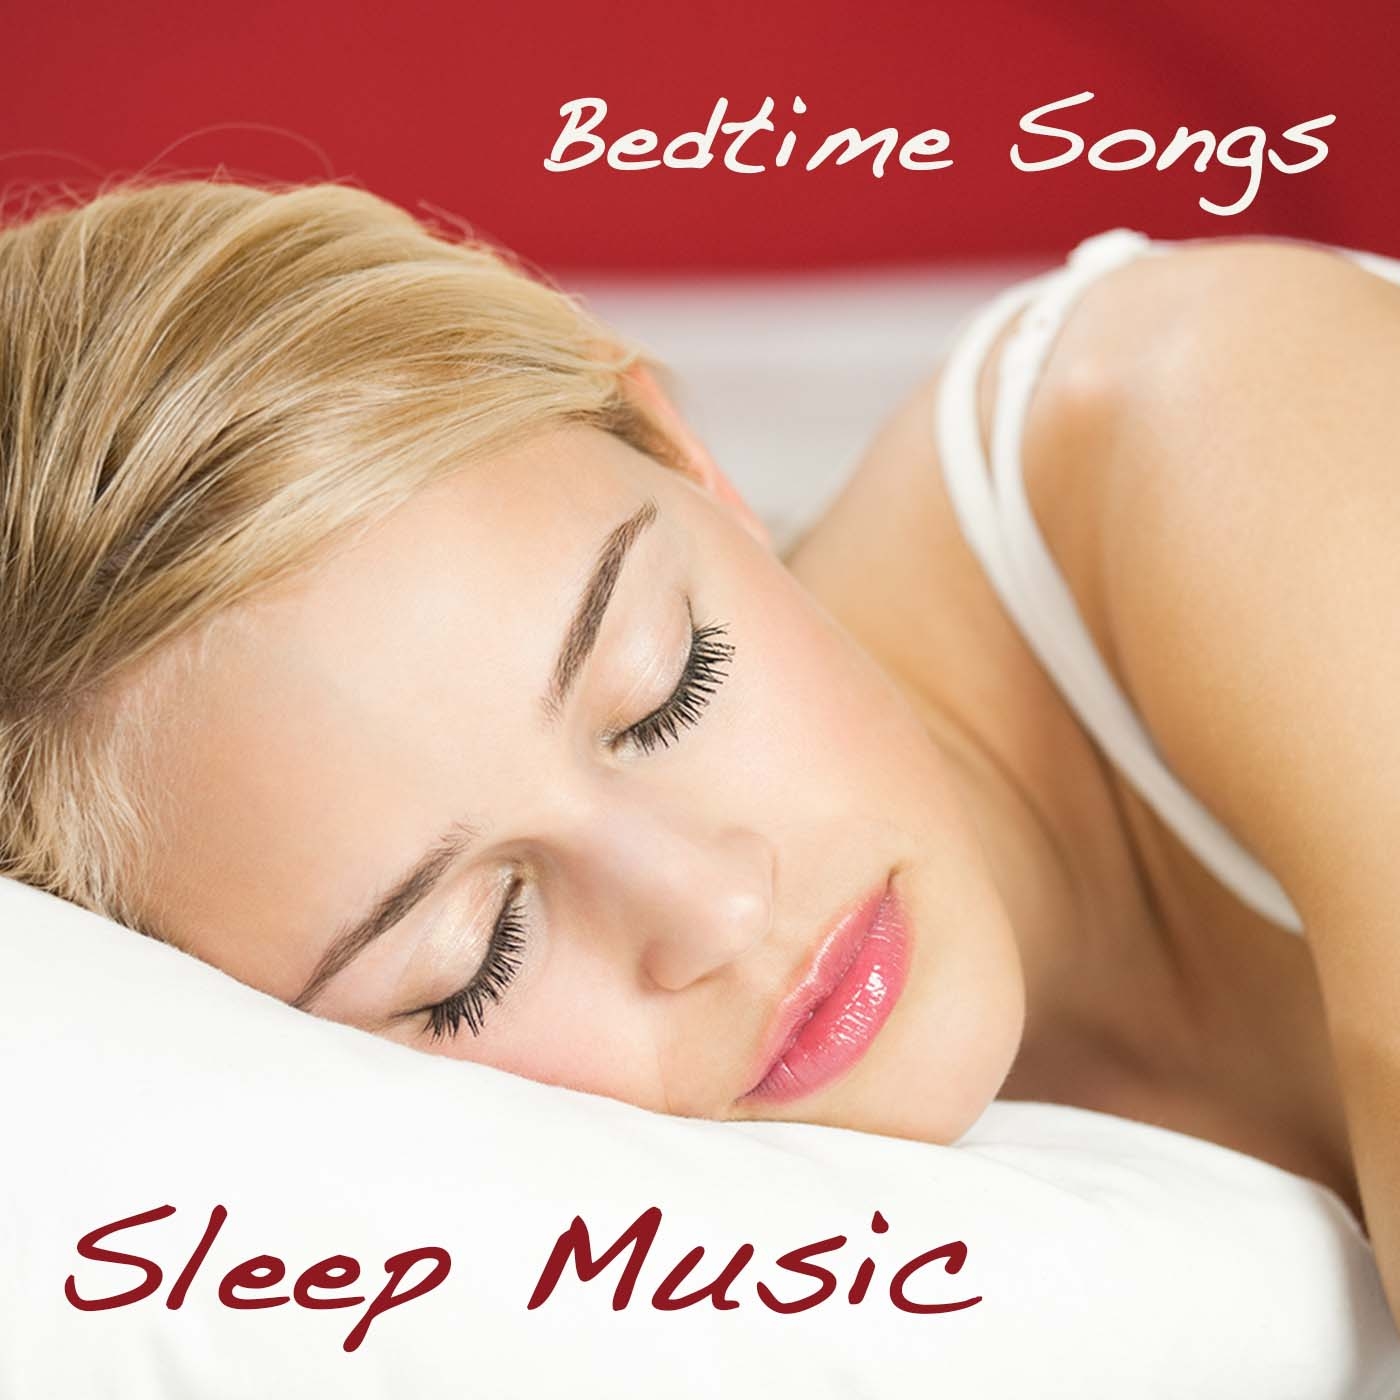 Sleep Music: Bedtime Songs